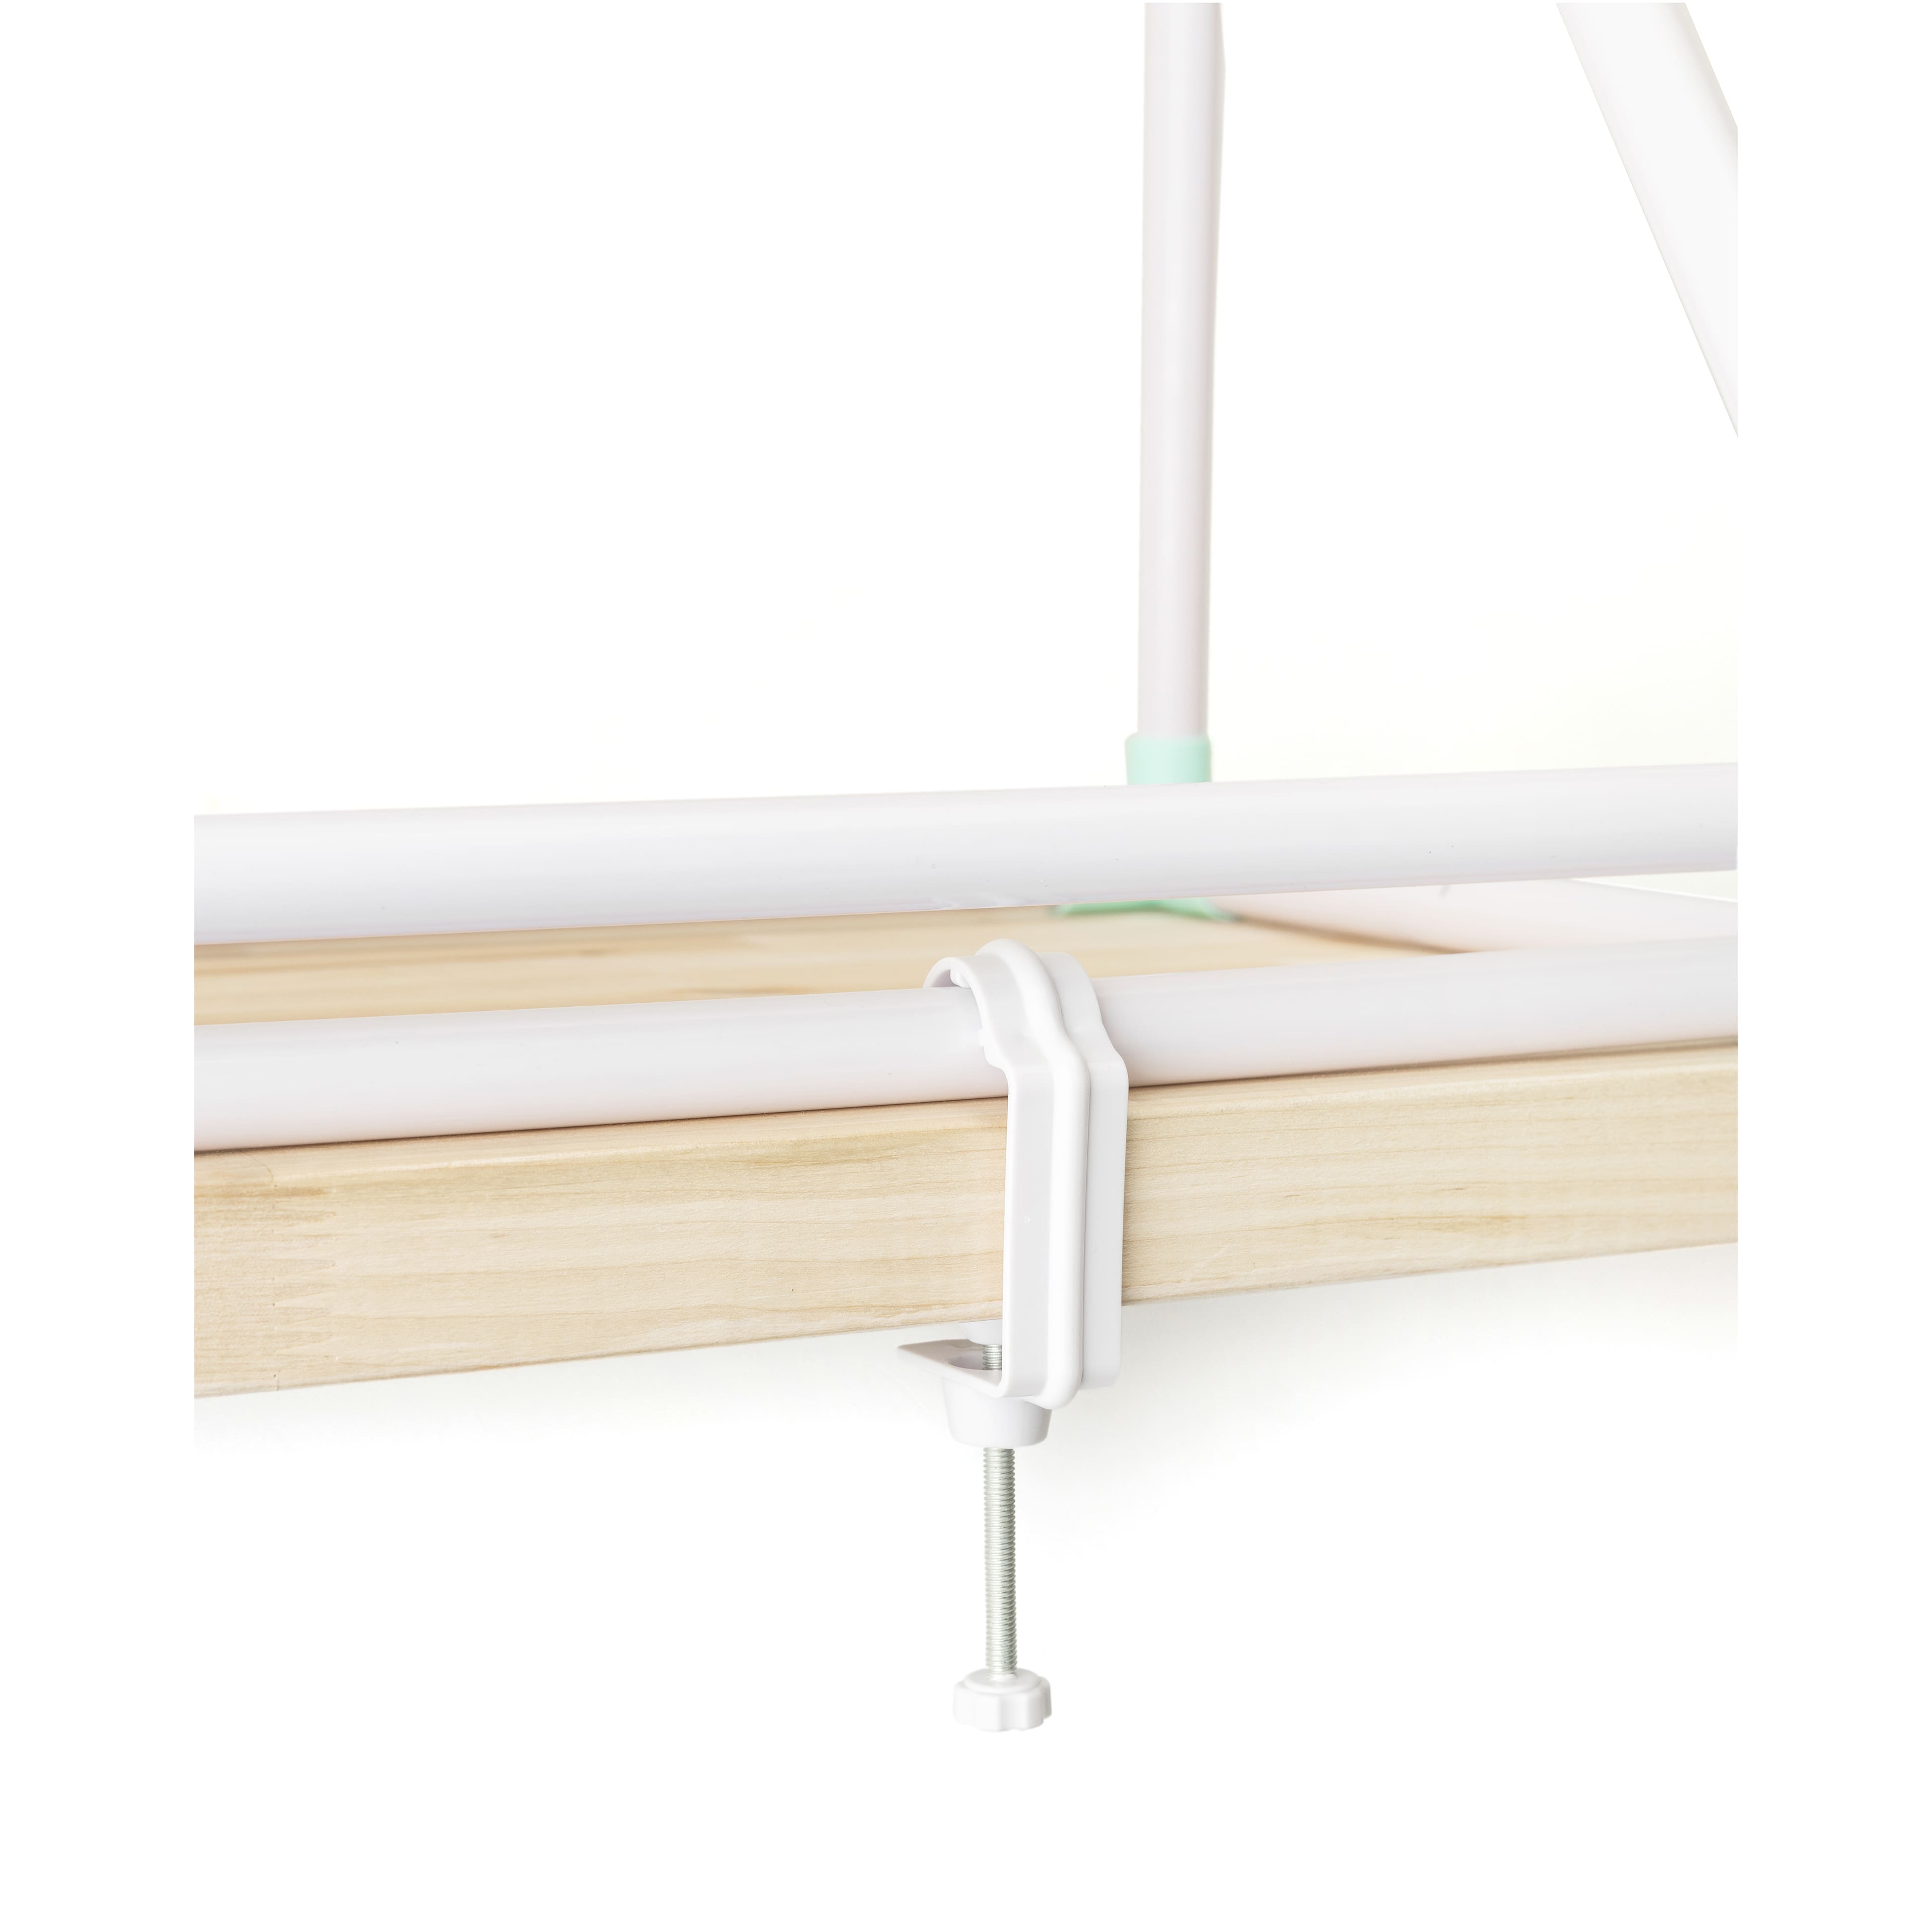 Tufting wood frame – LeTufting